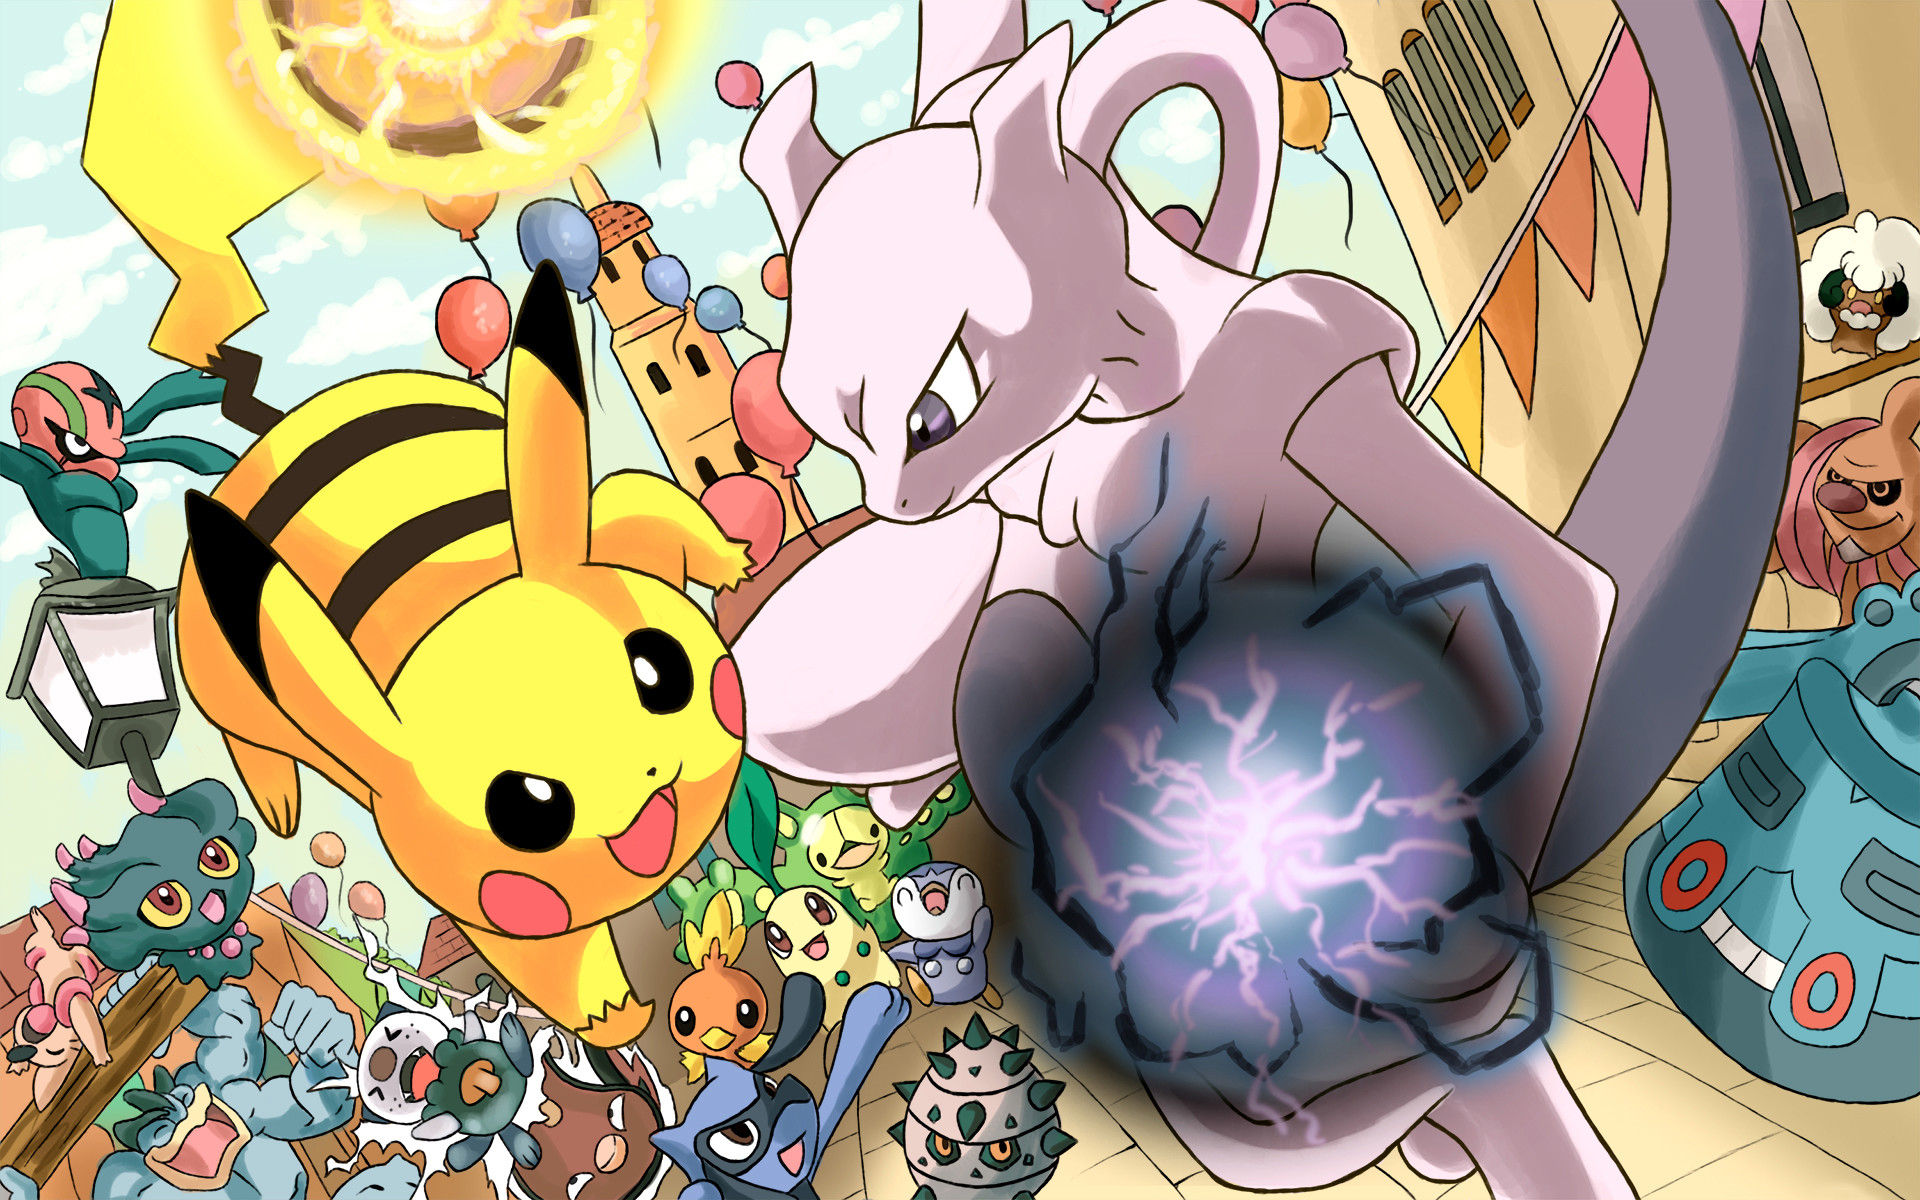 Wallpaper ID 476894  Anime Pokémon Phone Wallpaper Mewtwo Pokémon  720x1280 free download